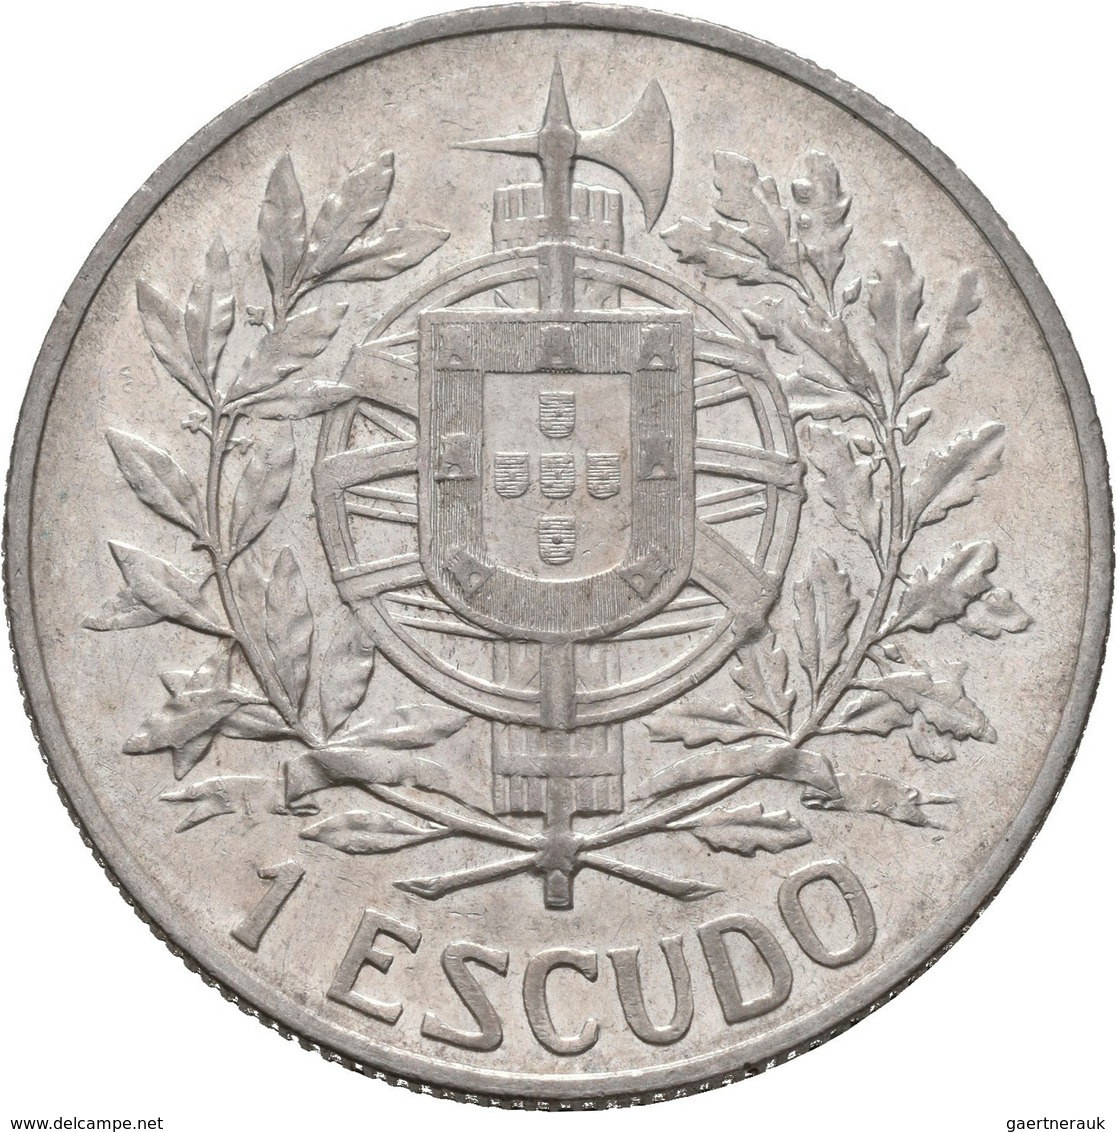 Portugal: Republik 1910-: Lot 2 Stück; 1000 Reis 1910, 1915, KM 560/564, Vorzüglich. - Portugal